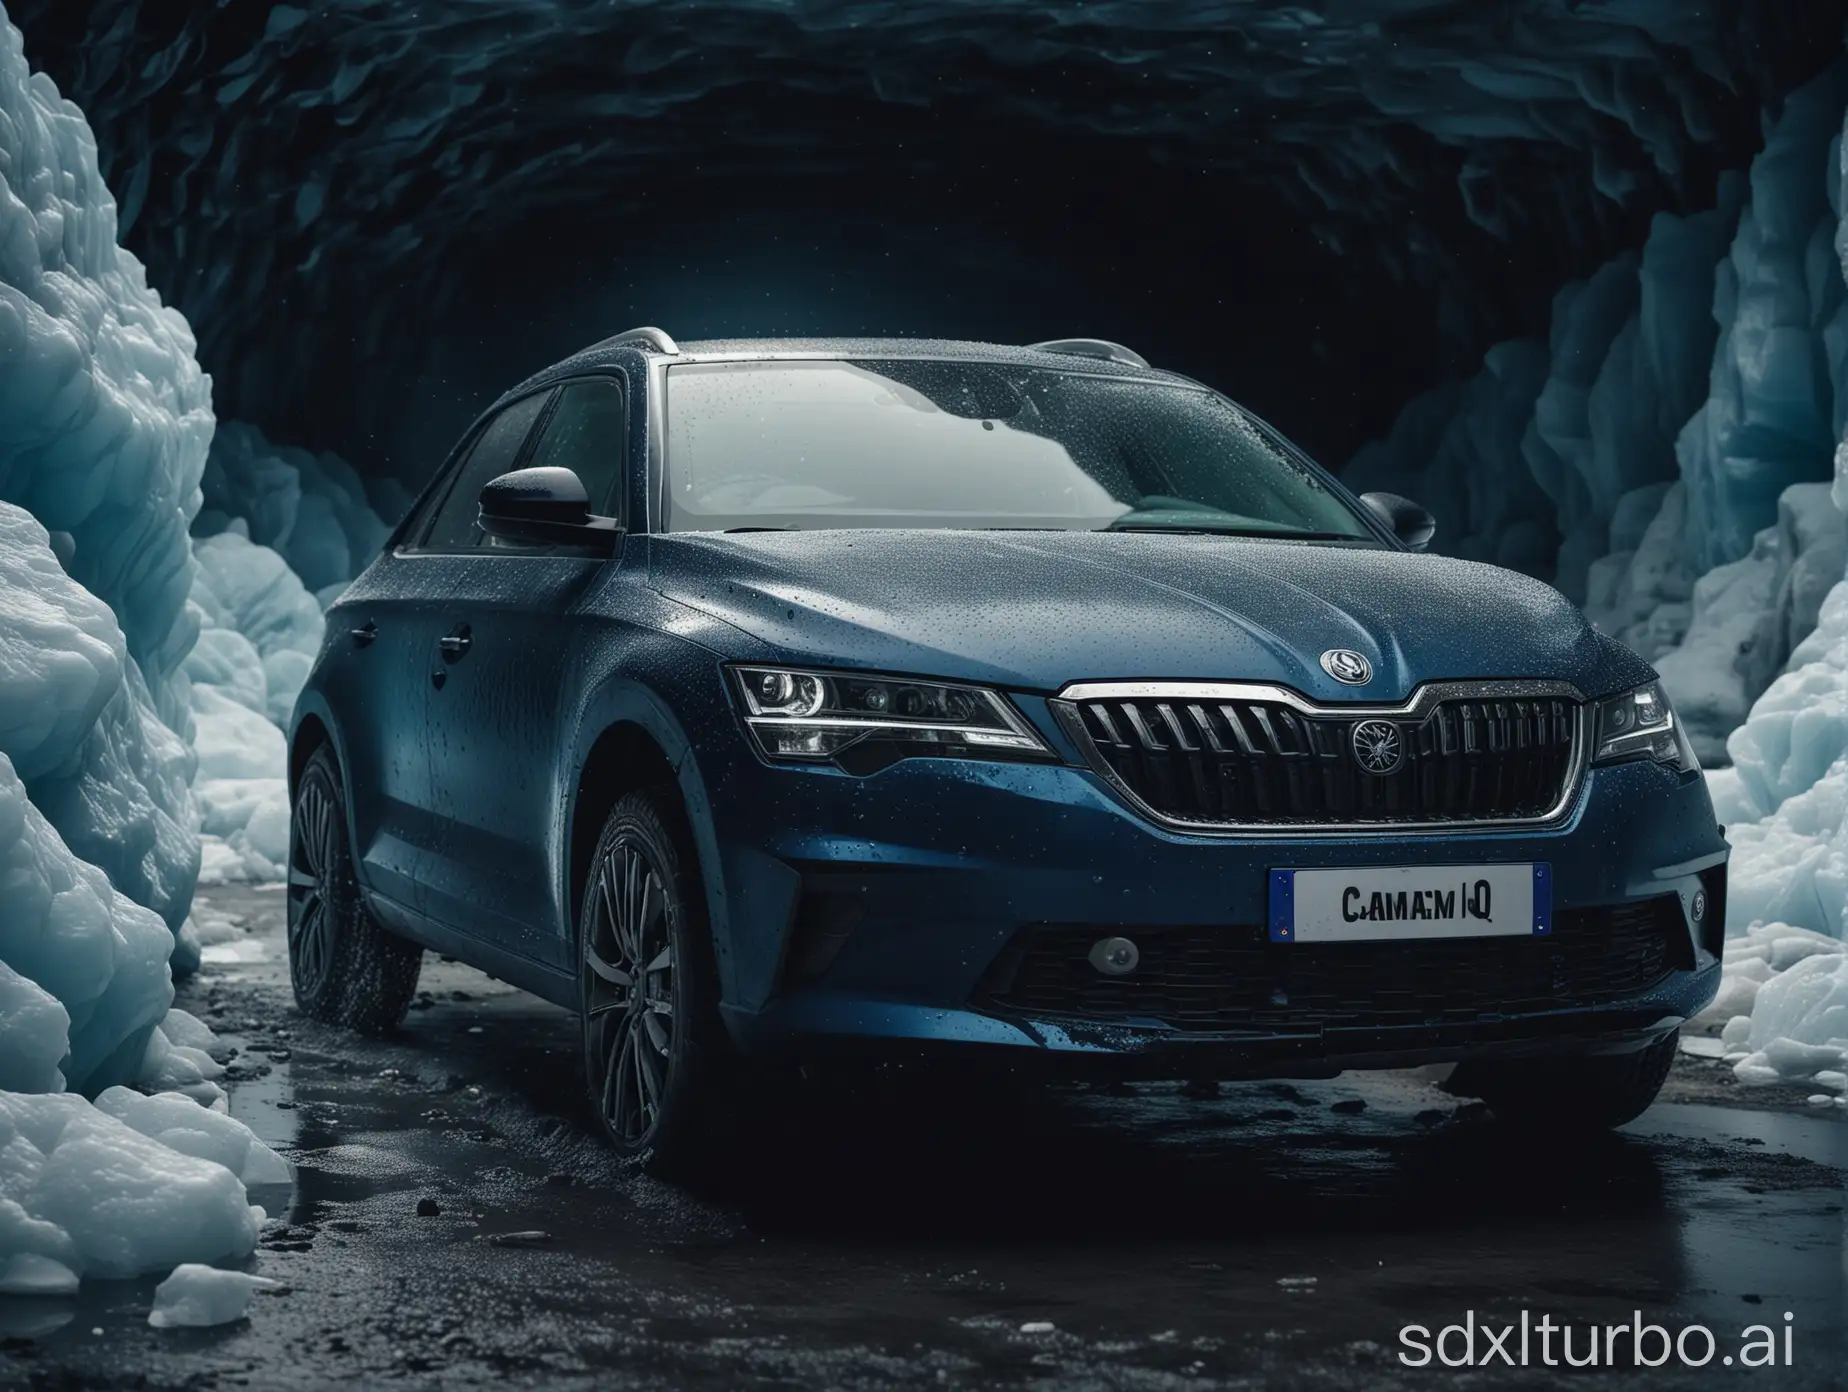 Skoda-Camiq-Car-Driving-in-Dark-Blue-Glacial-Ice-Cave-Professional-Front-Portrait-Photo